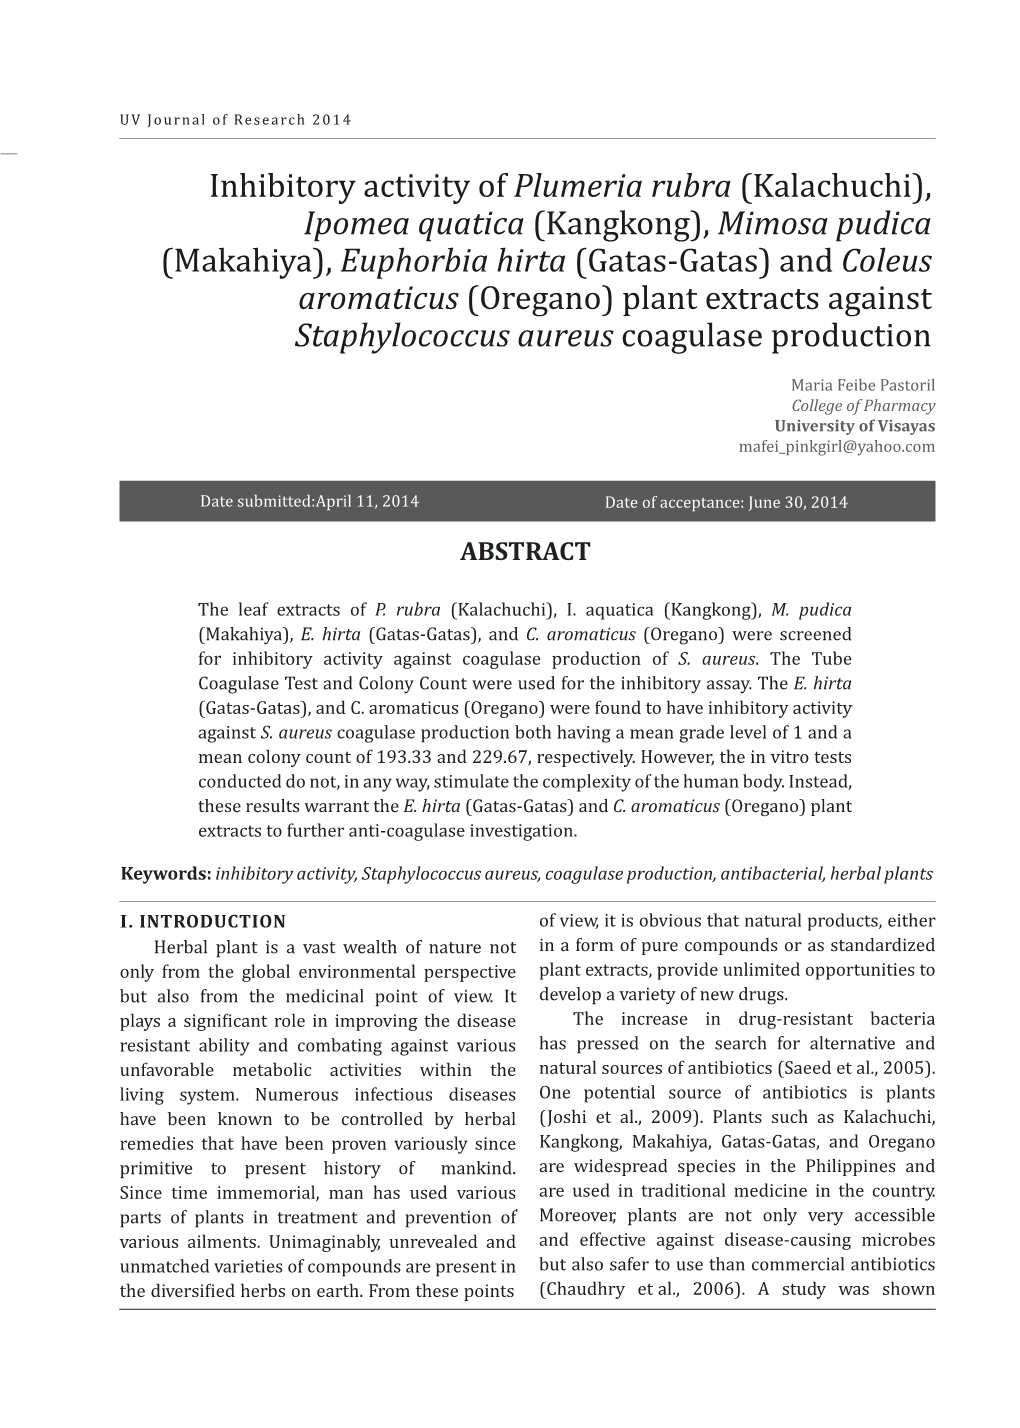 Inhibitory Activity of Plumeria Rubra (Kalachuchi), Ipomea Quatica